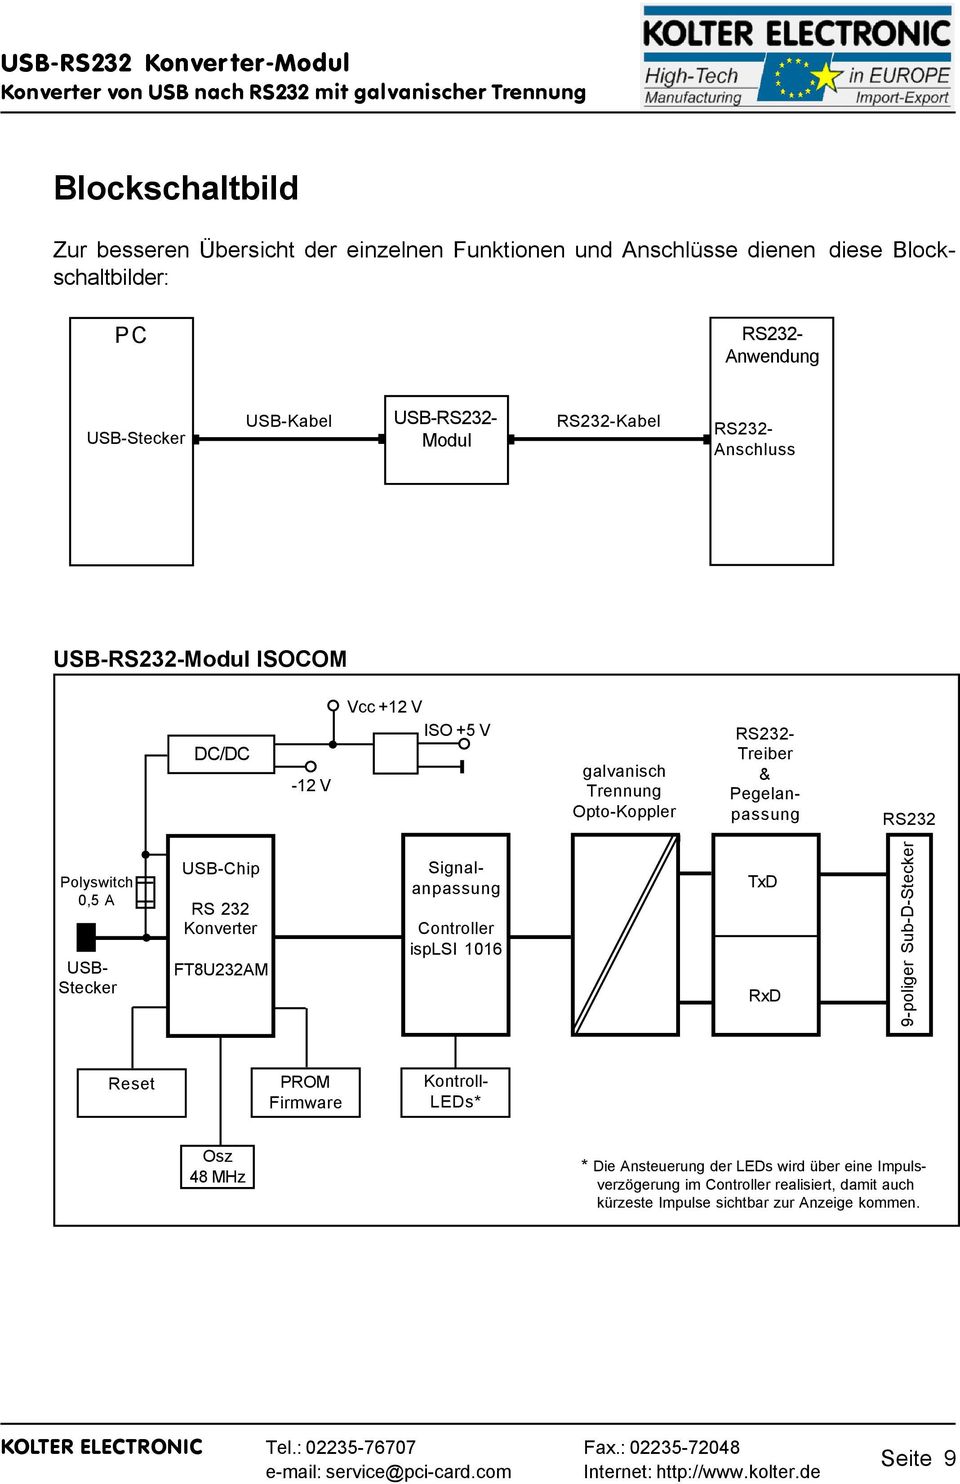 Polyswitch 0,5 A USB- Stecker USB-Chip RS 232 Konverter FT8U232AM Signalanpassung Controller isplsi 1016 TxD RxD 9-poliger Sub-D-Stecker Reset PROM Firmware